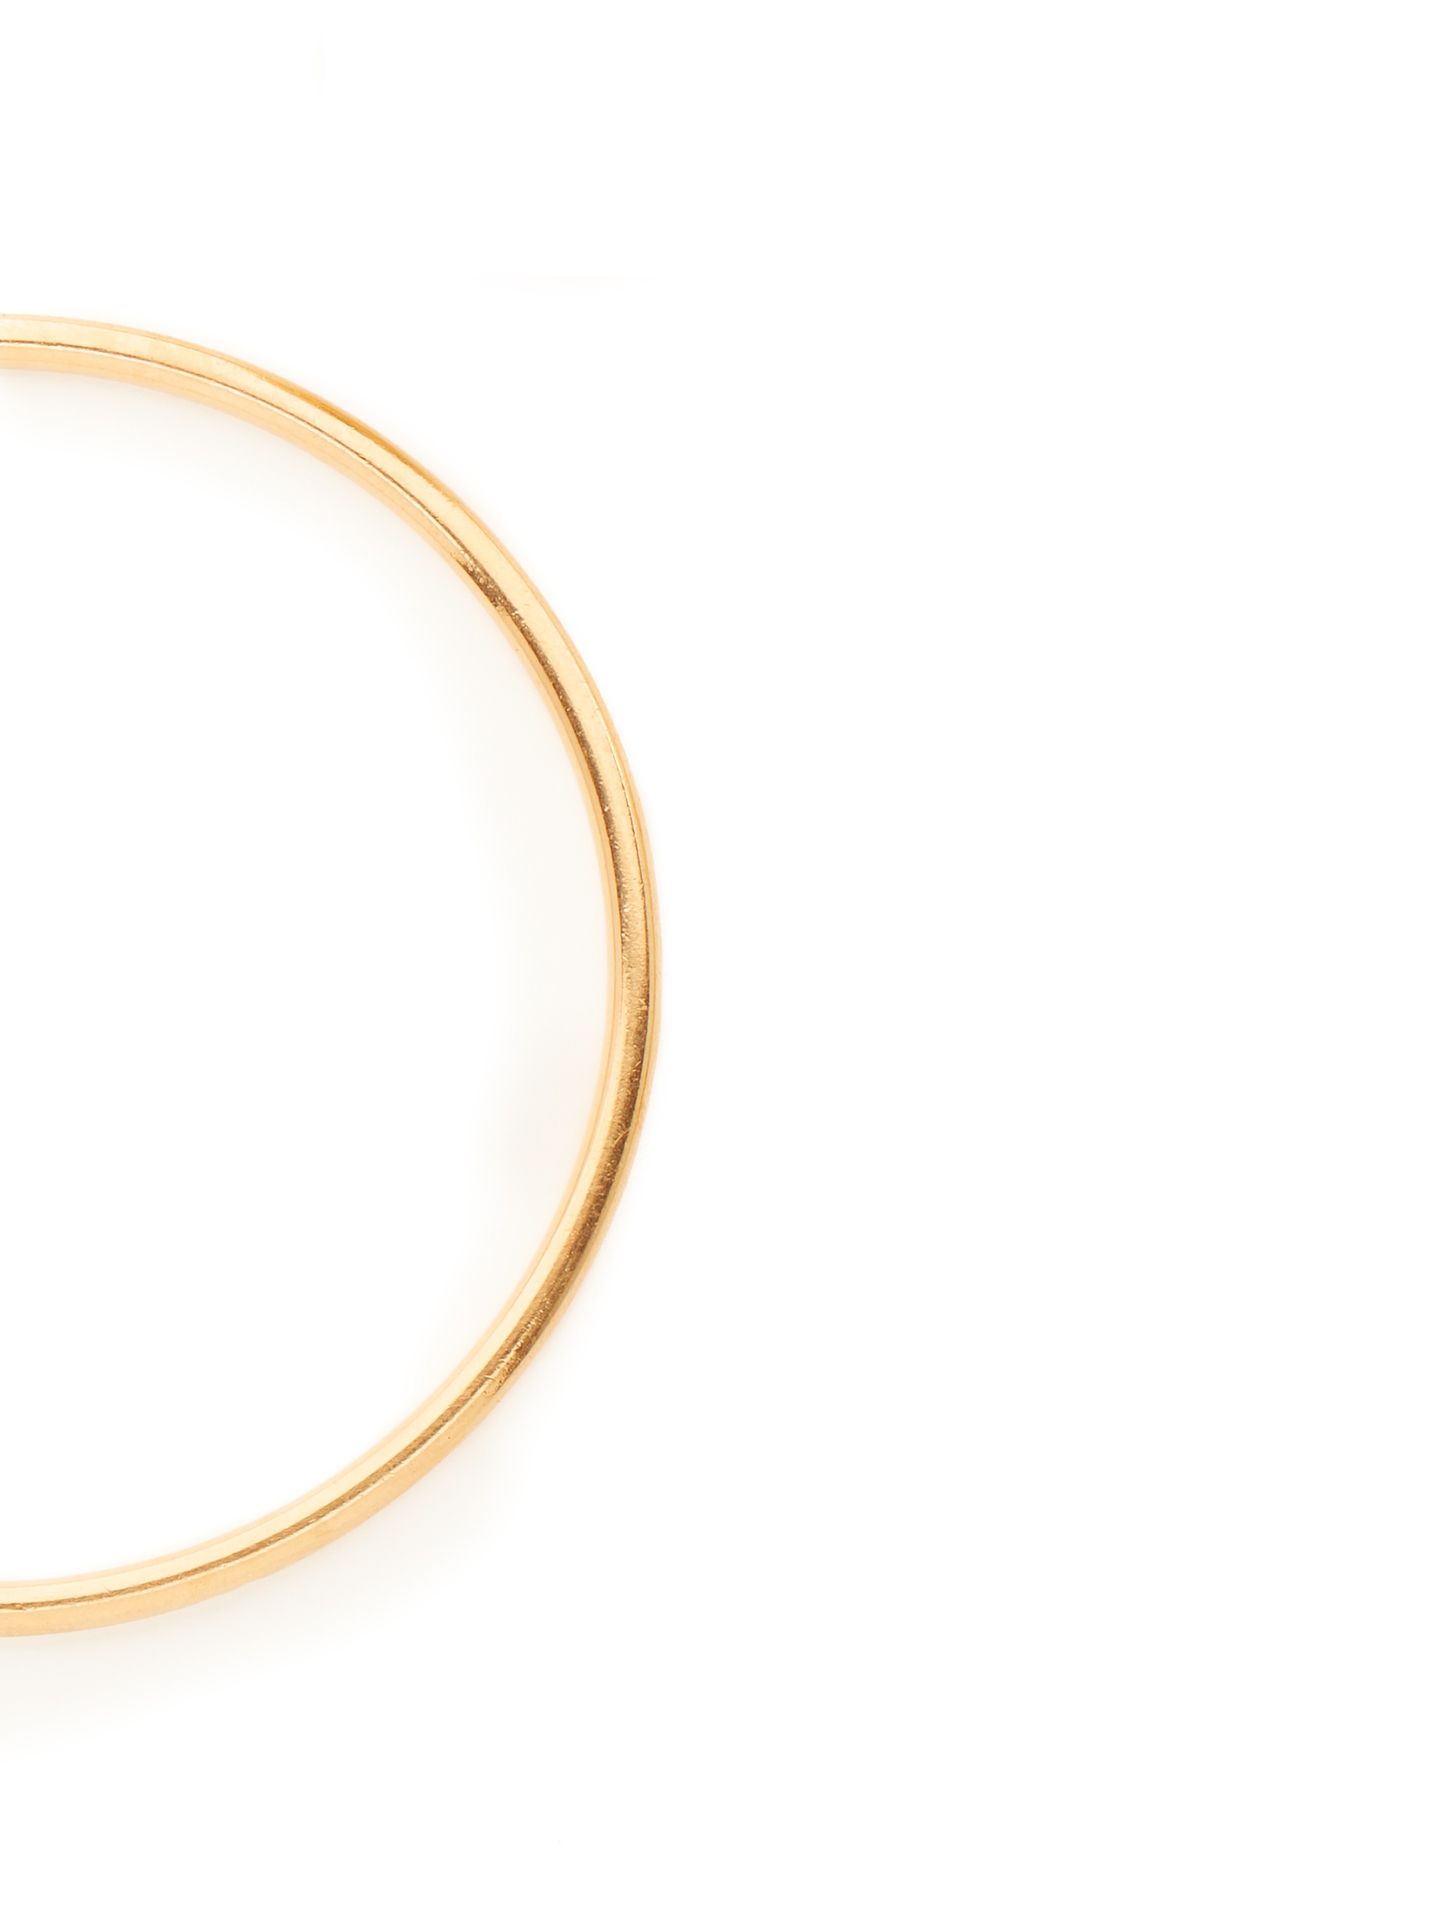 Null Bracelet in 18K yellow gold 750/000
Weight : 24,7 g - D. 6,9 cm
Slightly sc&hellip;